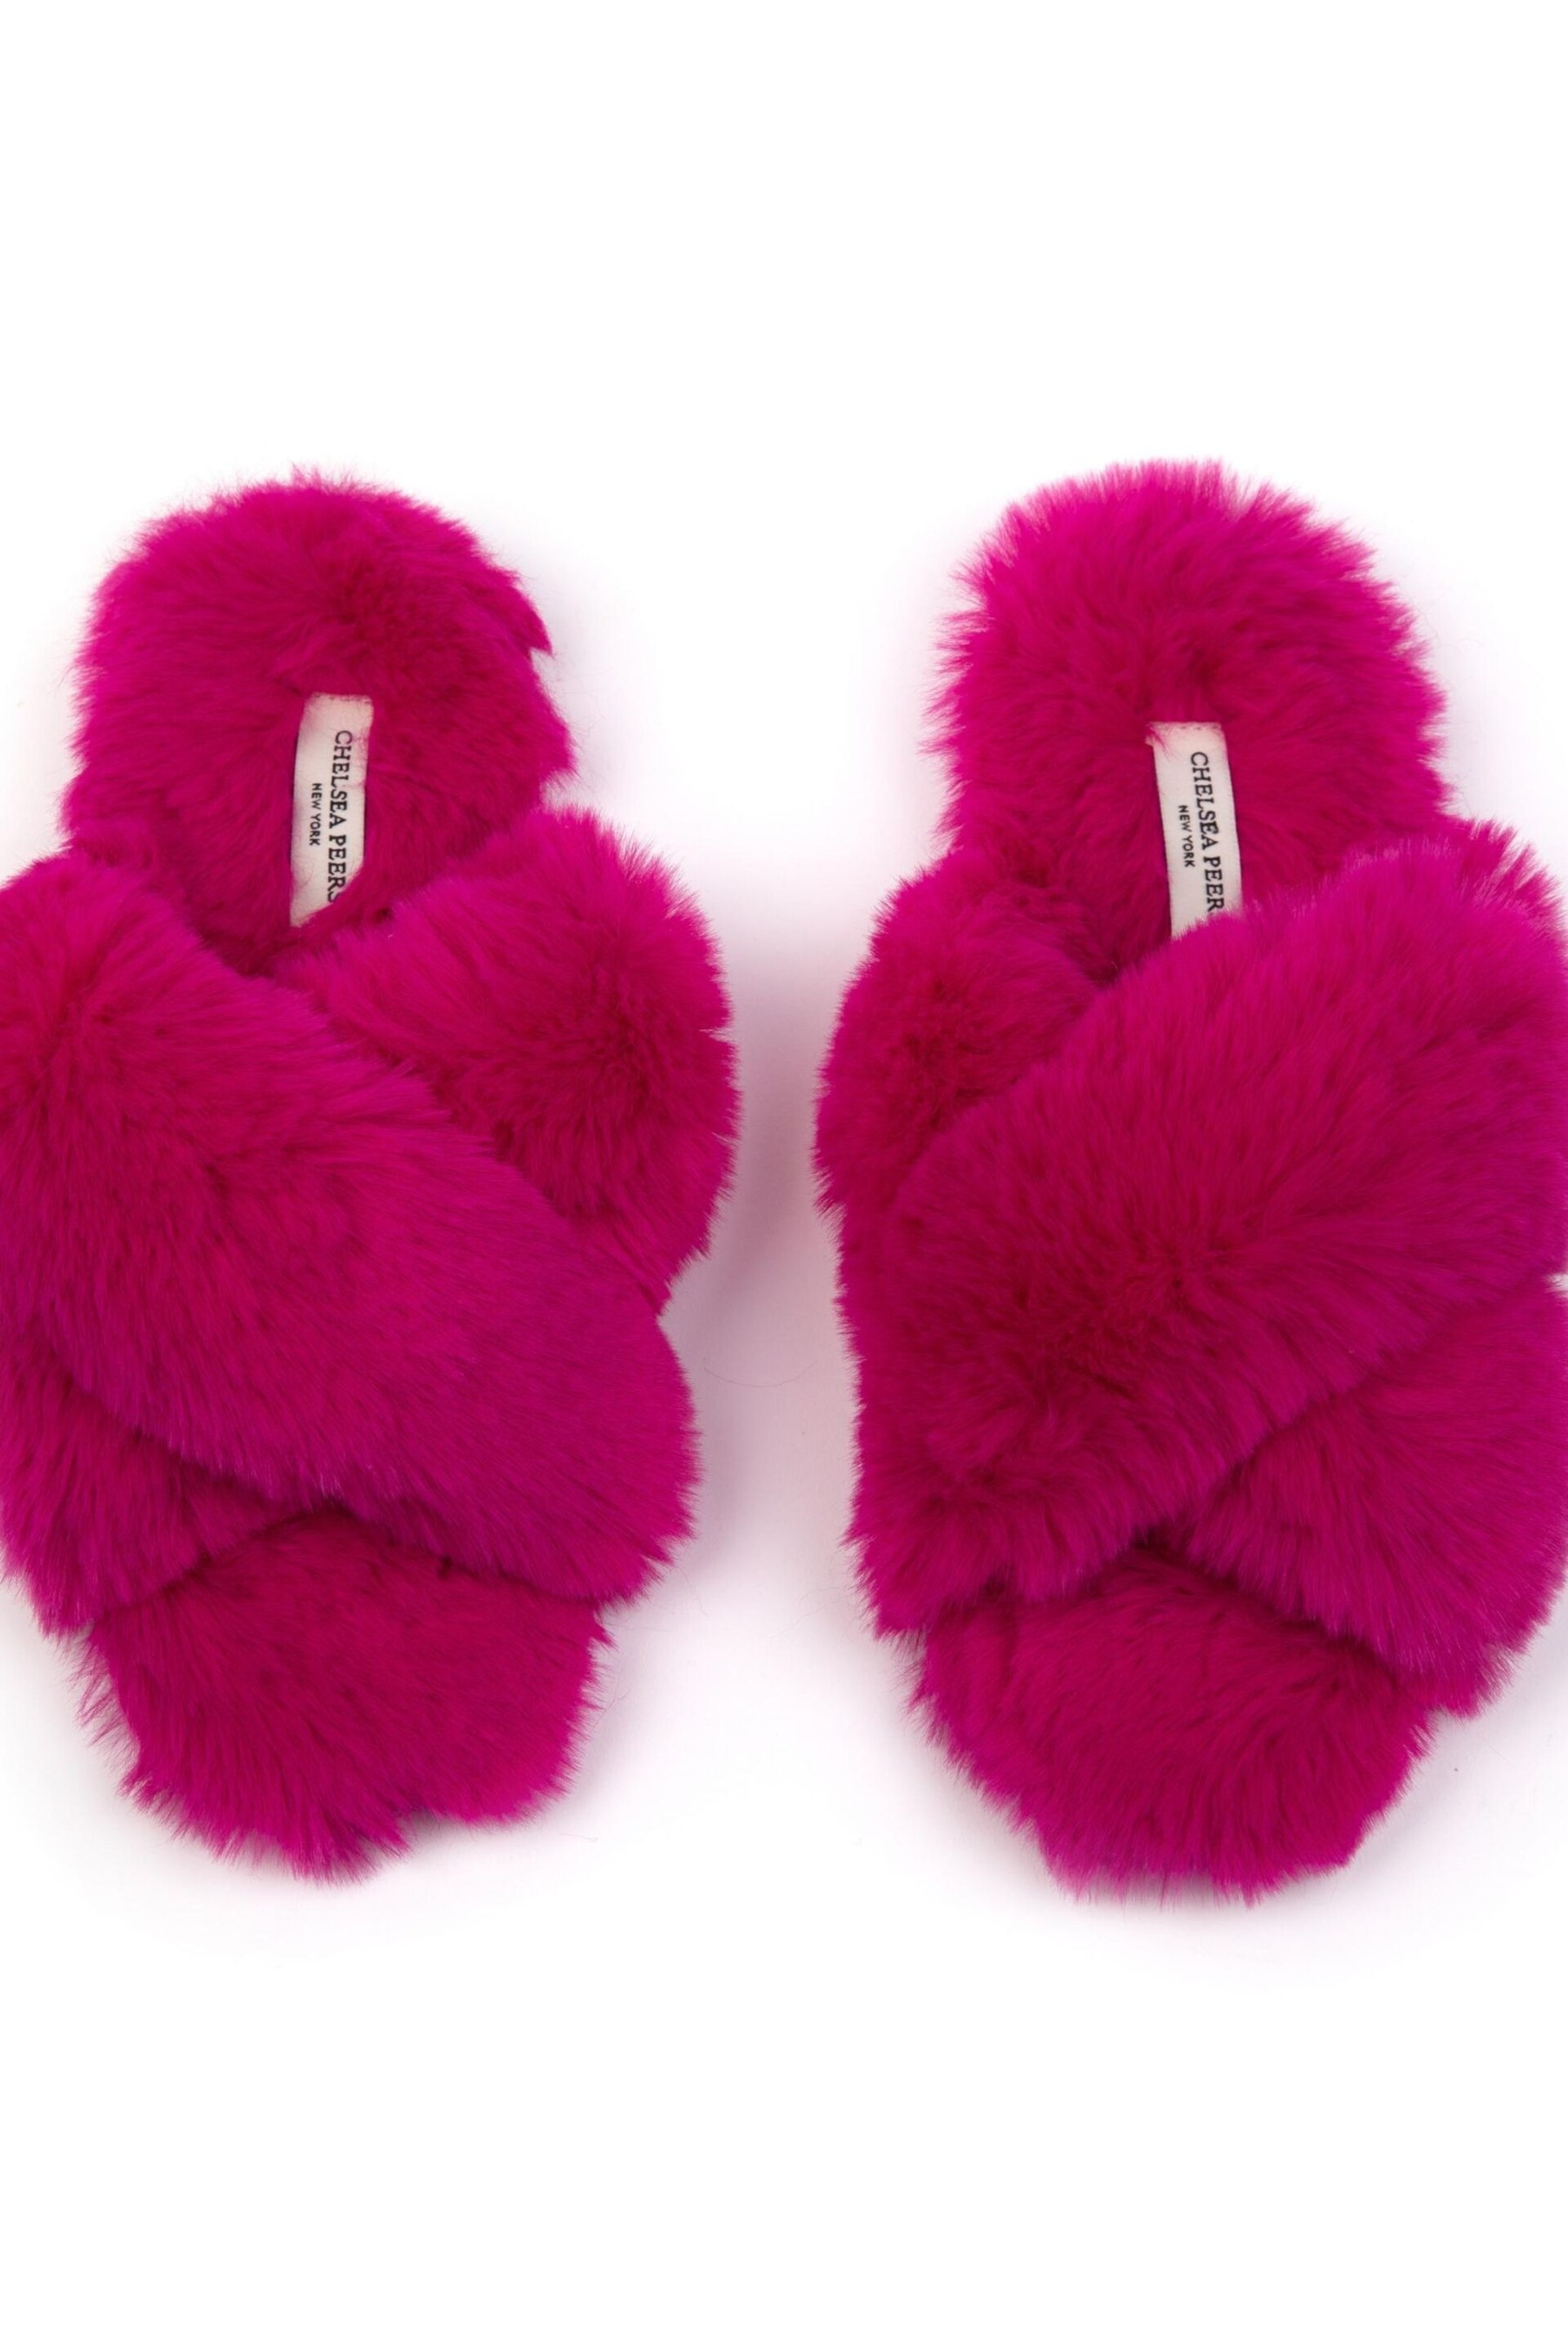 Chelsea Peers Pink Regular Fit Fluffy Cross Strap Slider Slippers - Image 2 of 5